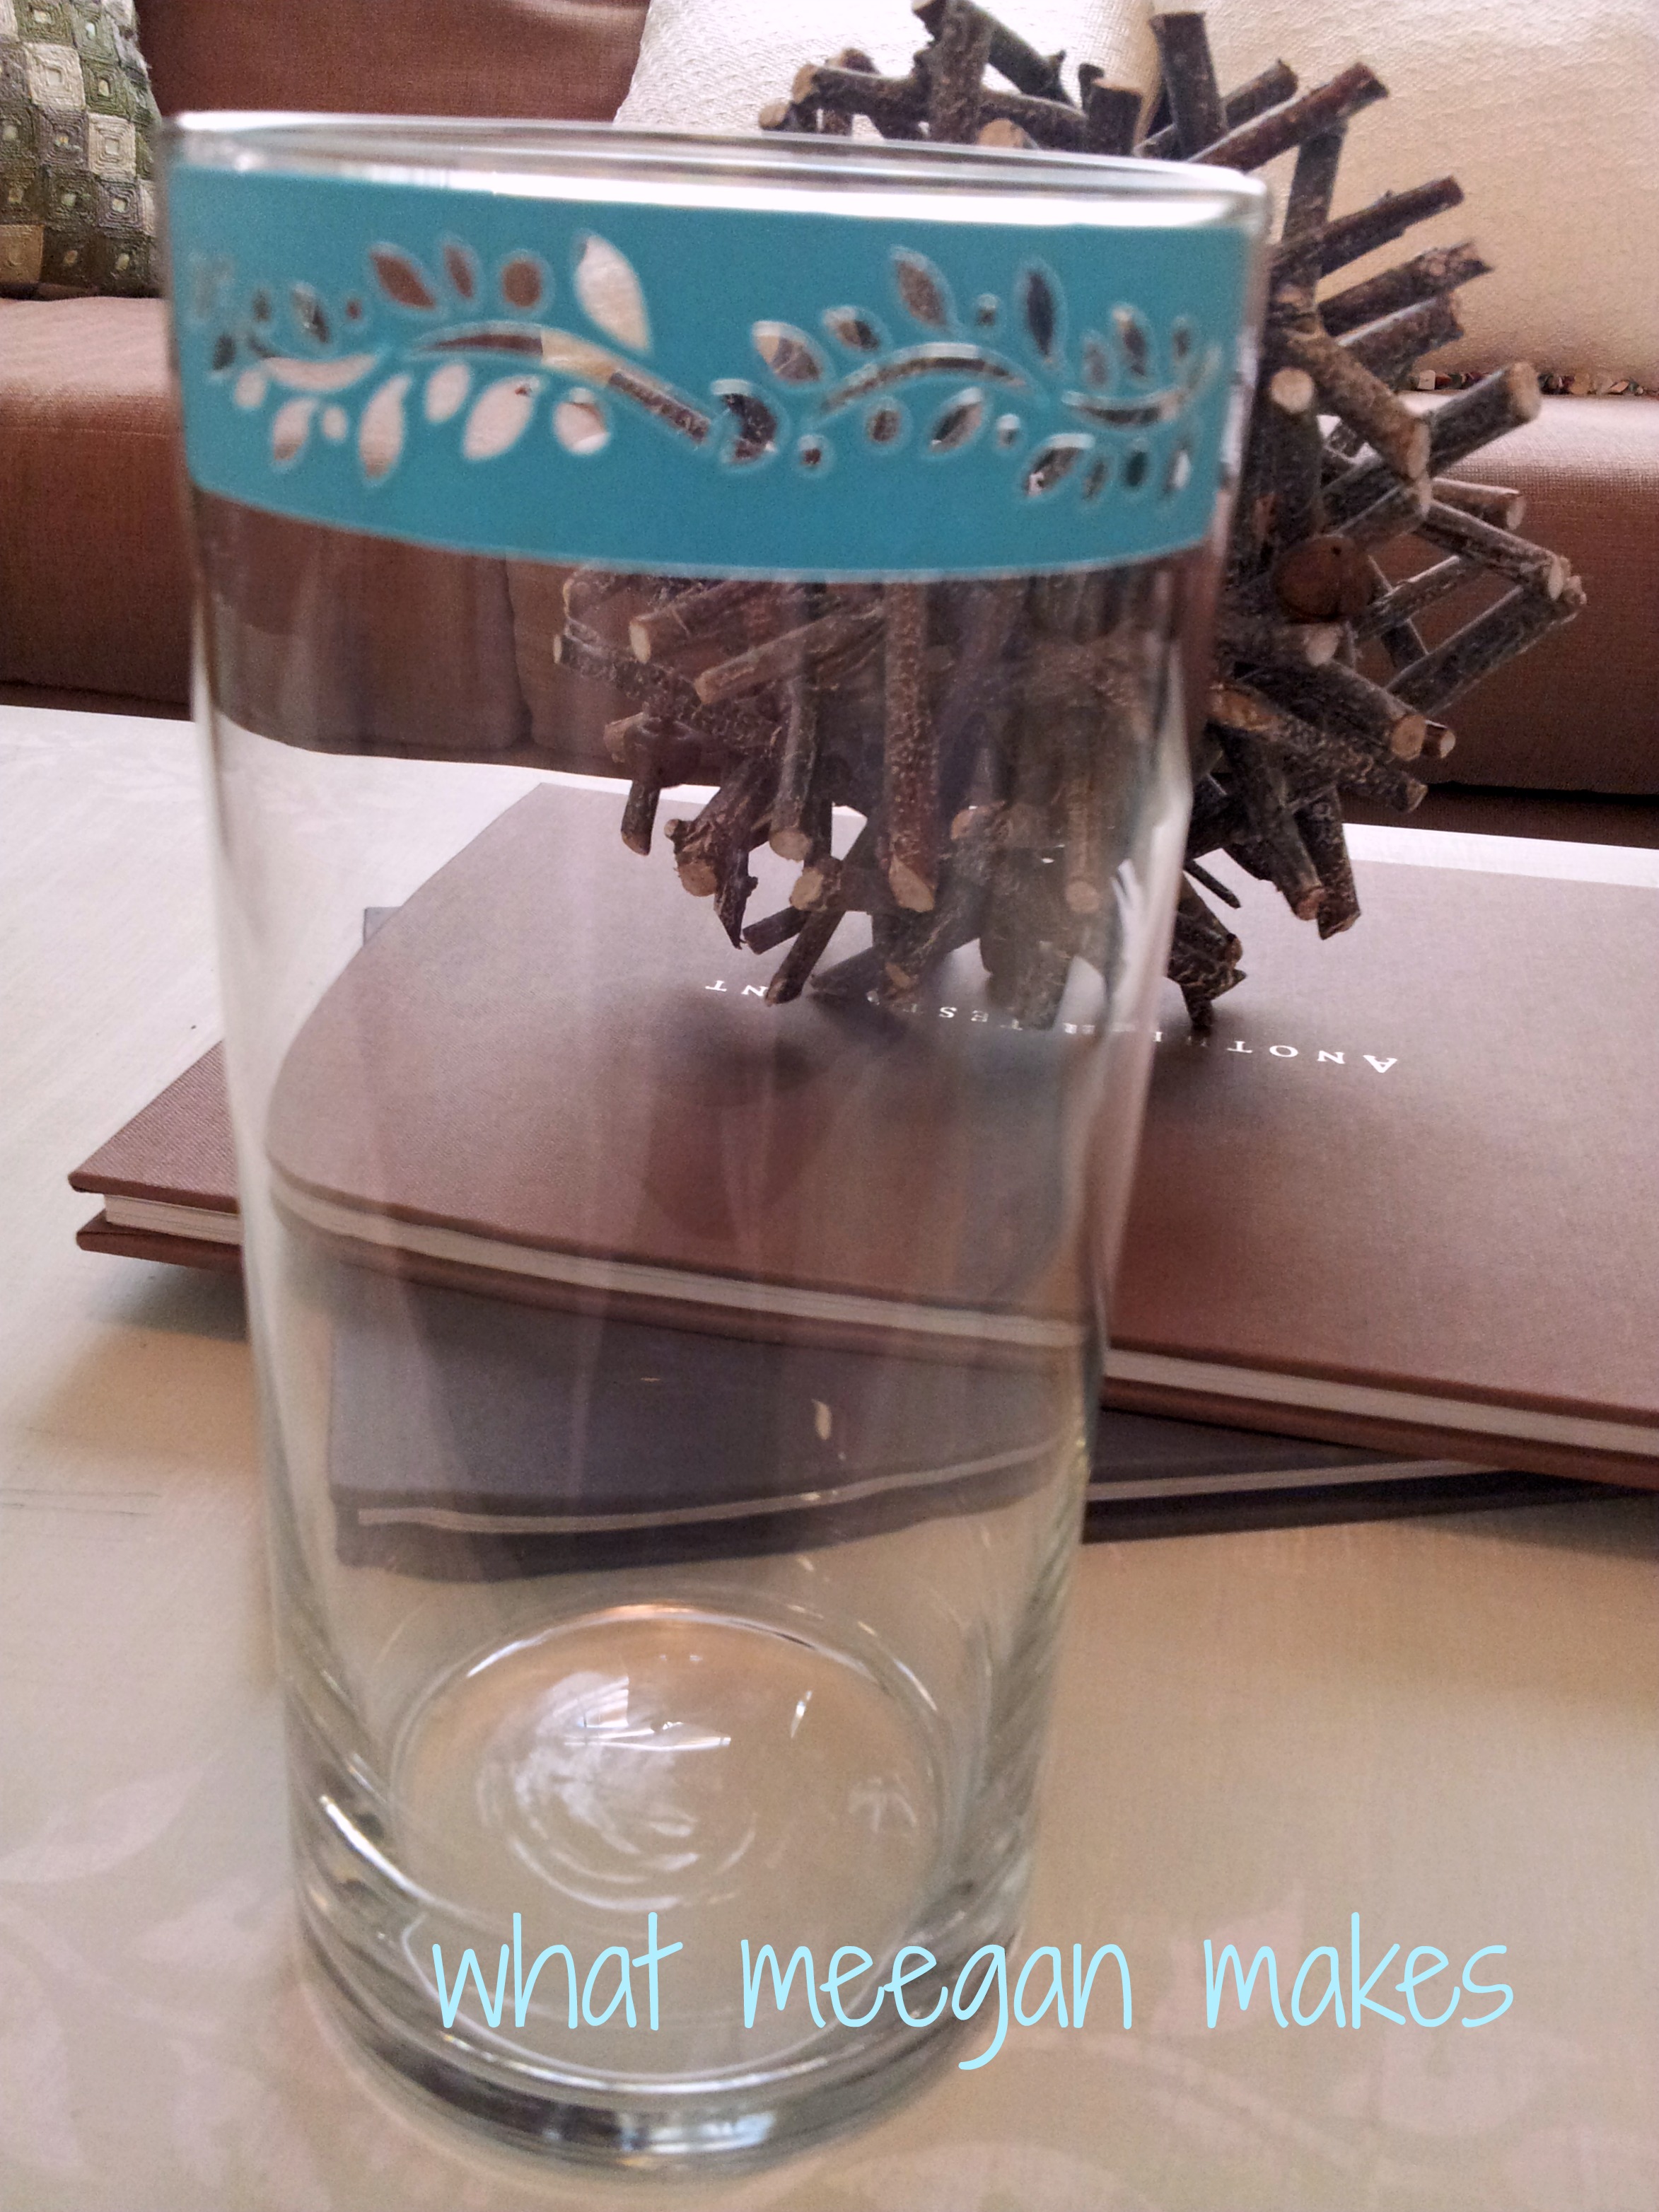 Etched Glass Vase